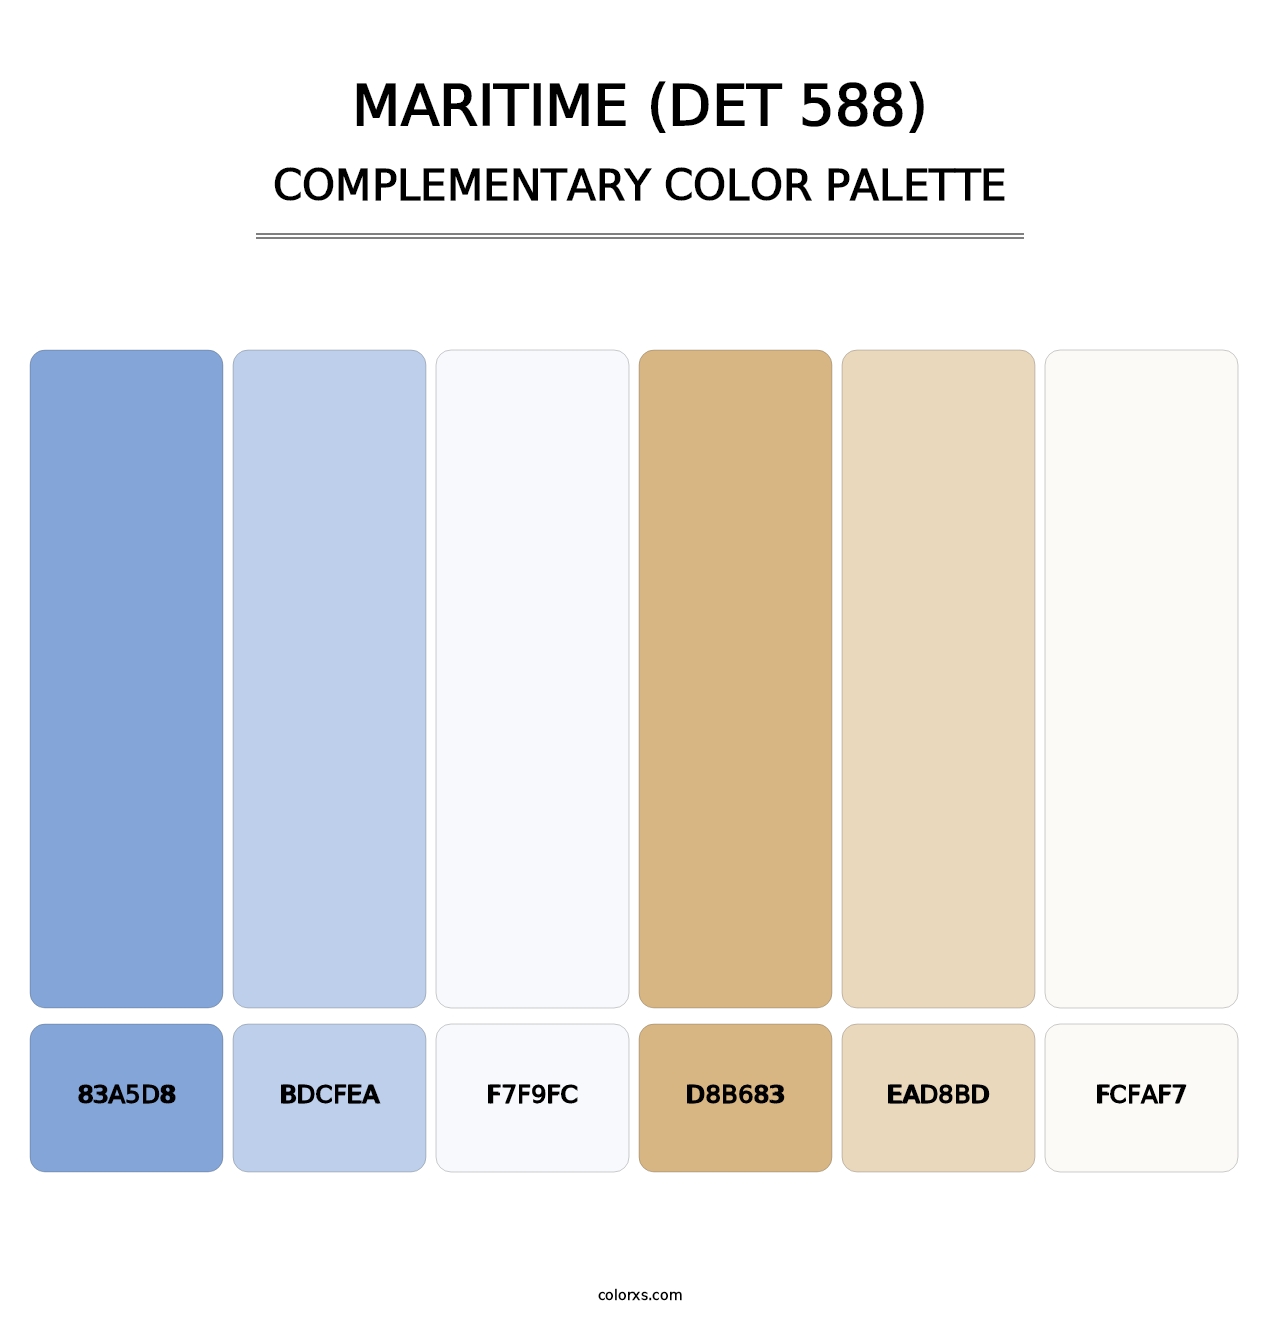 Maritime (DET 588) - Complementary Color Palette